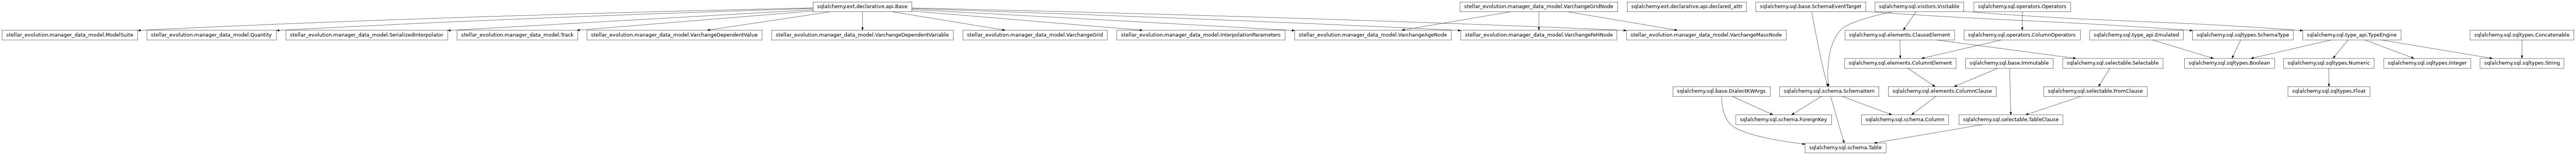 Inheritance diagram of Boolean, Column, DataModelBase, Float, ForeignKey, Integer, InterpolationParameters, ModelSuite, Numeric, Quantity, SerializedInterpolator, String, Table, Track, VarchangeAgeNode, VarchangeDependentValue, VarchangeDependentVariable, VarchangeFeHNode, VarchangeGrid, VarchangeGridNode, VarchangeMassNode, declared_attr